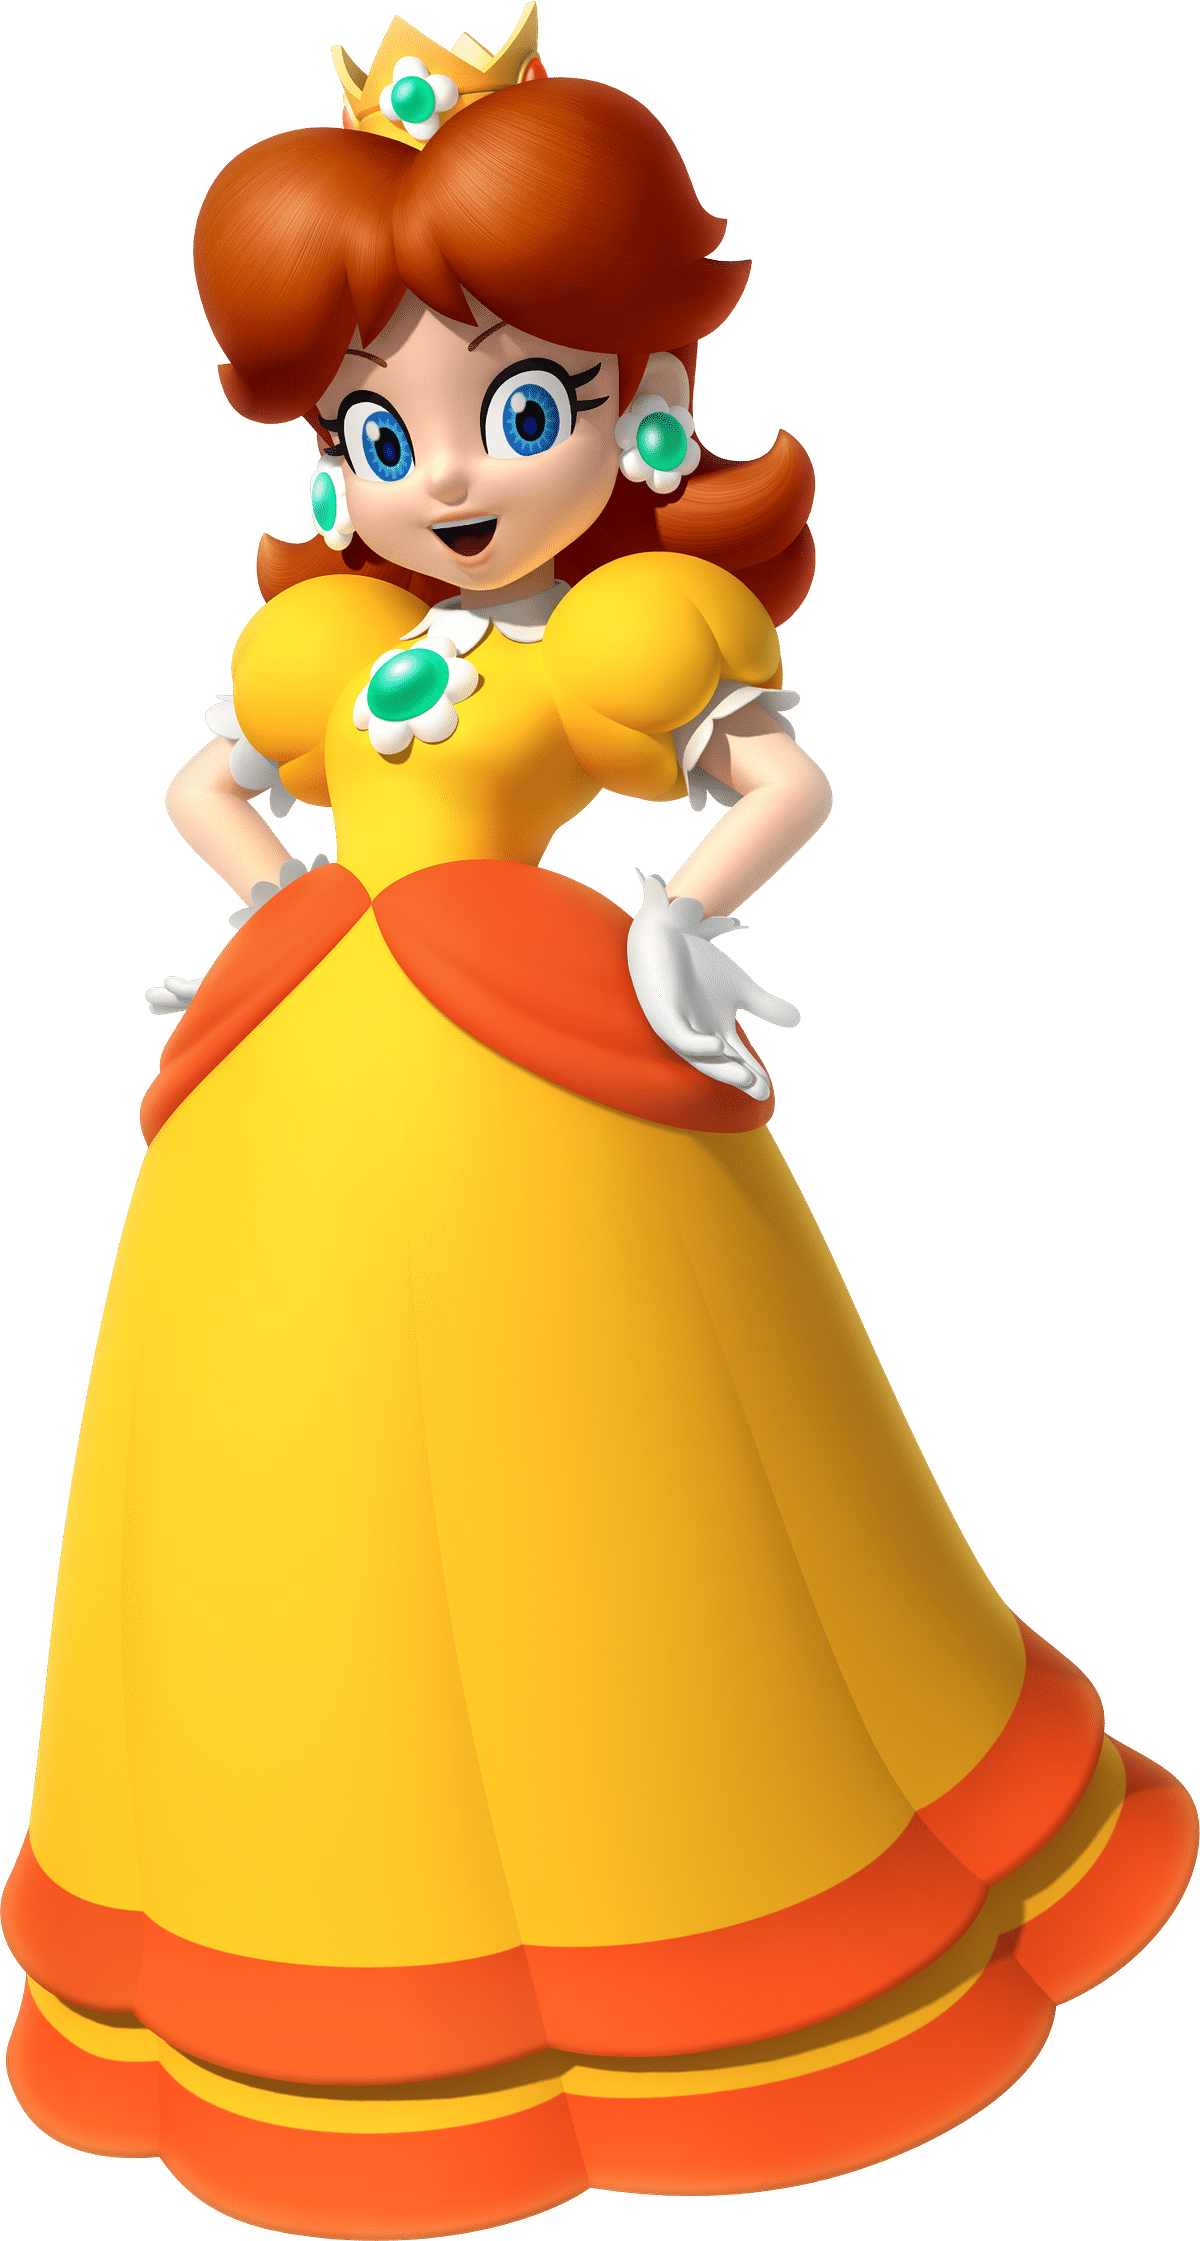 Princess Daisy costume